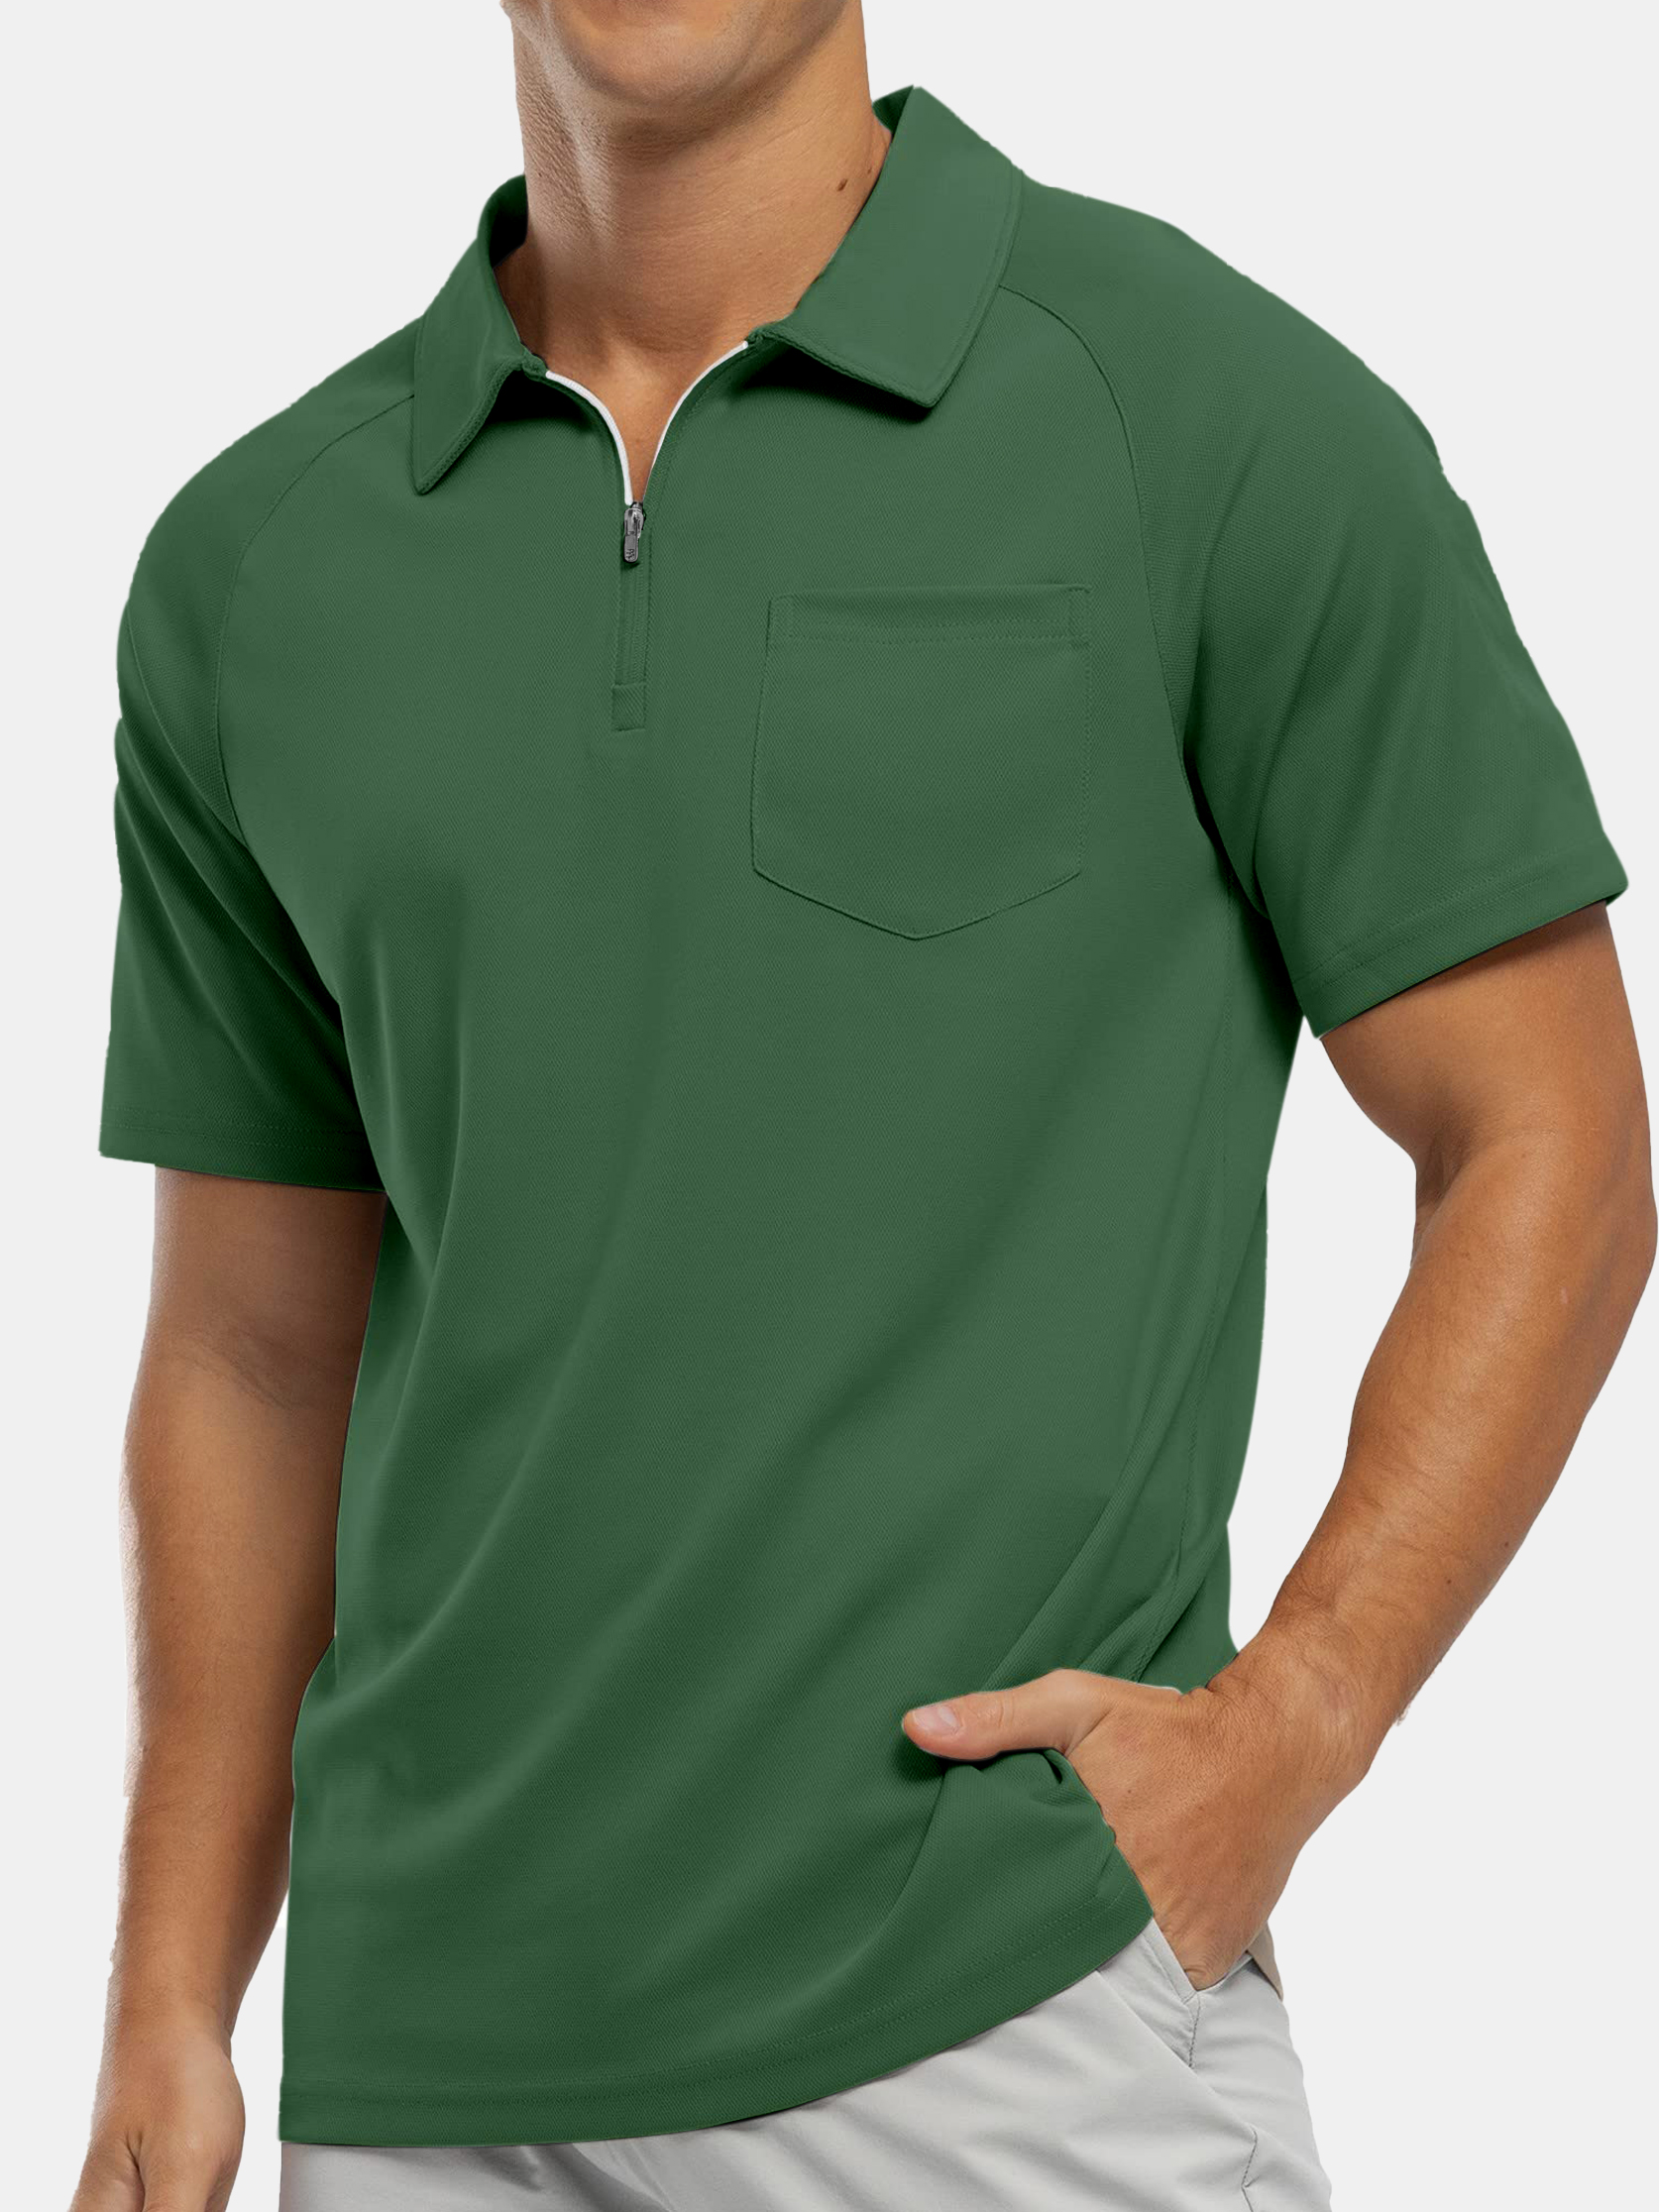 Men's Everyday Casual Raglan Sleeve Zipper Short Sleeve POLO Shirt